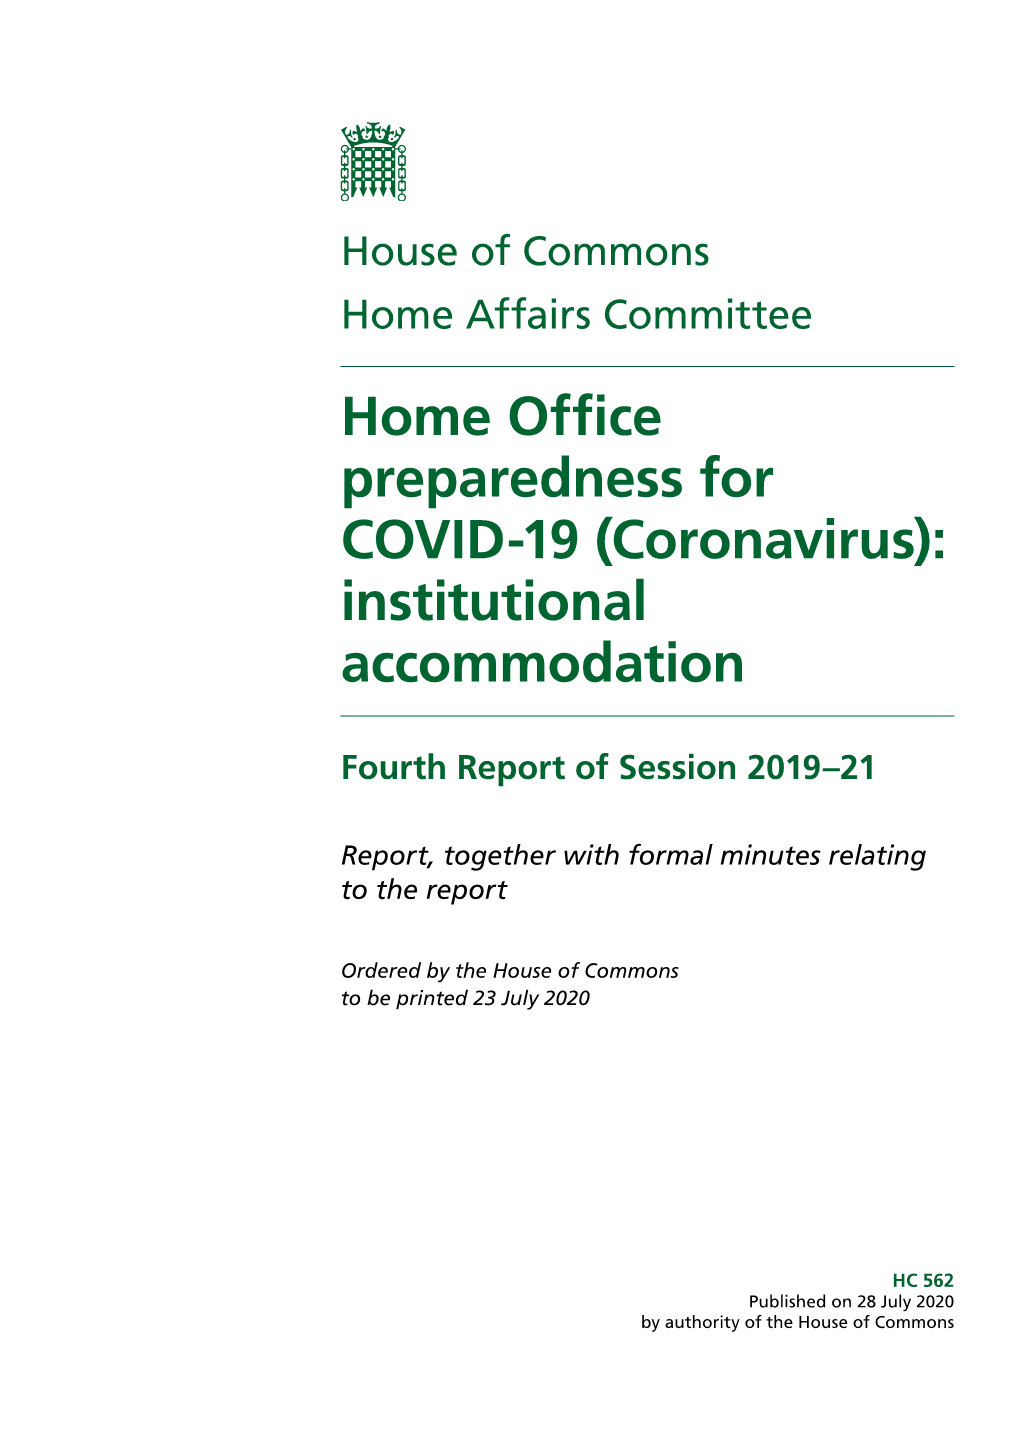 Home Office Preparedness for COVID-19 (Coronavirus): Institutional Accommodation